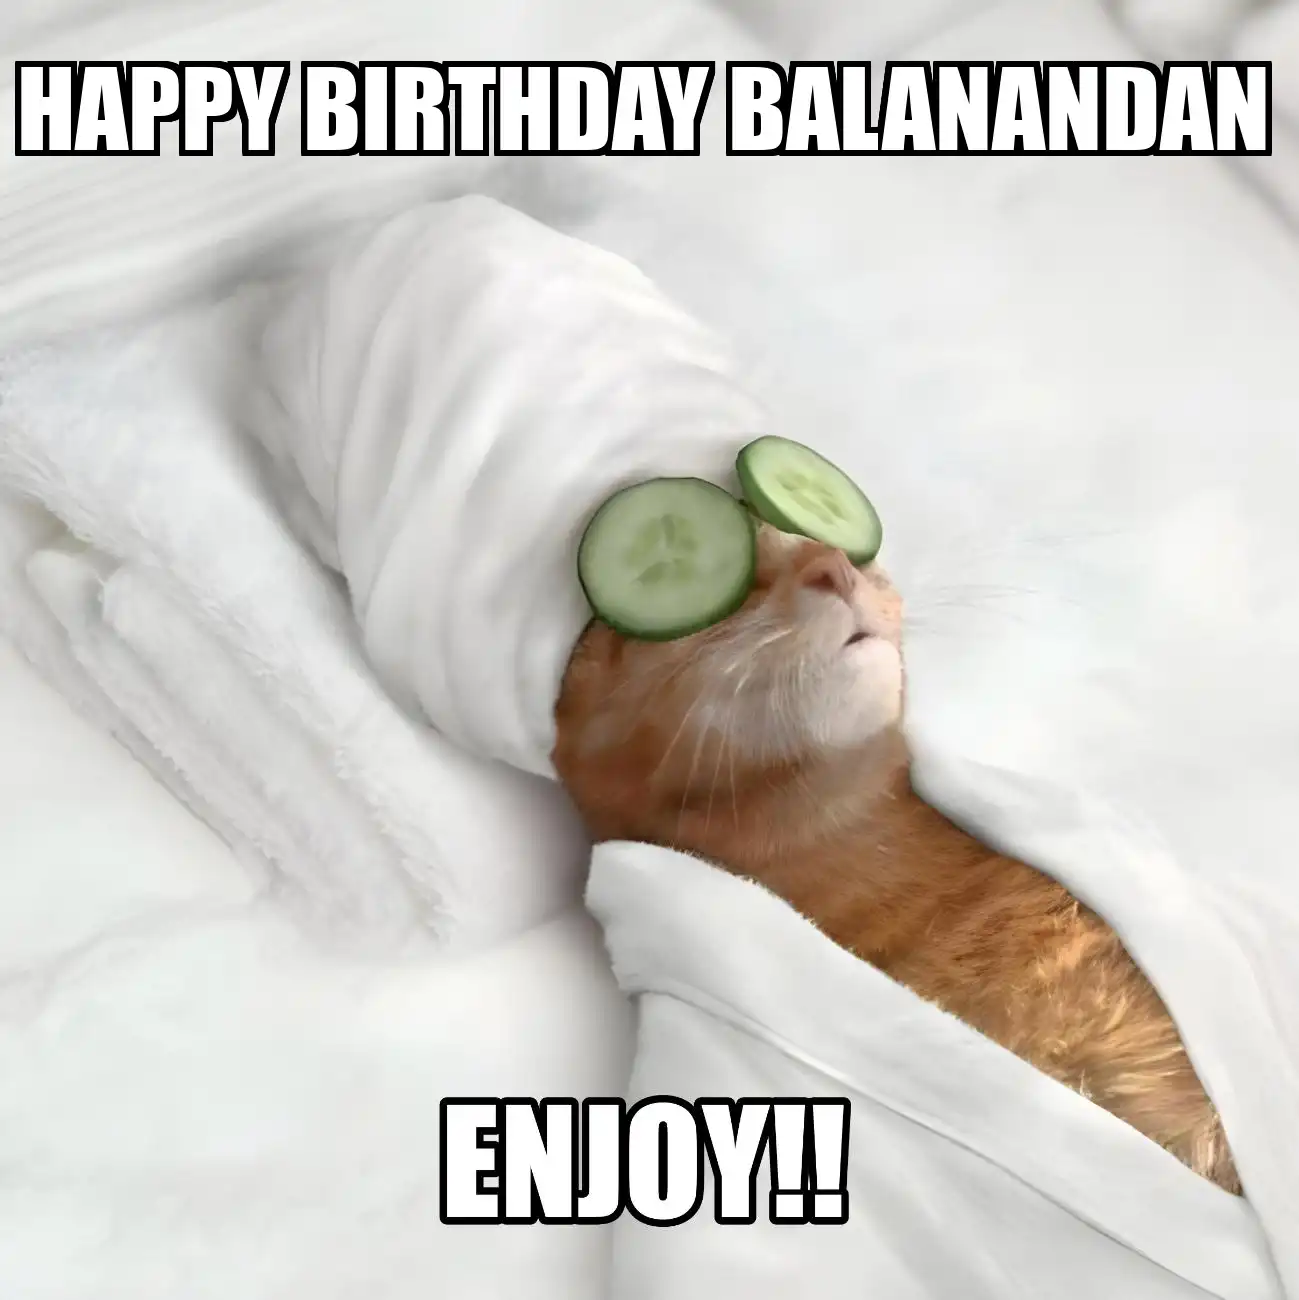 Happy Birthday Balanandan Enjoy Cat Meme